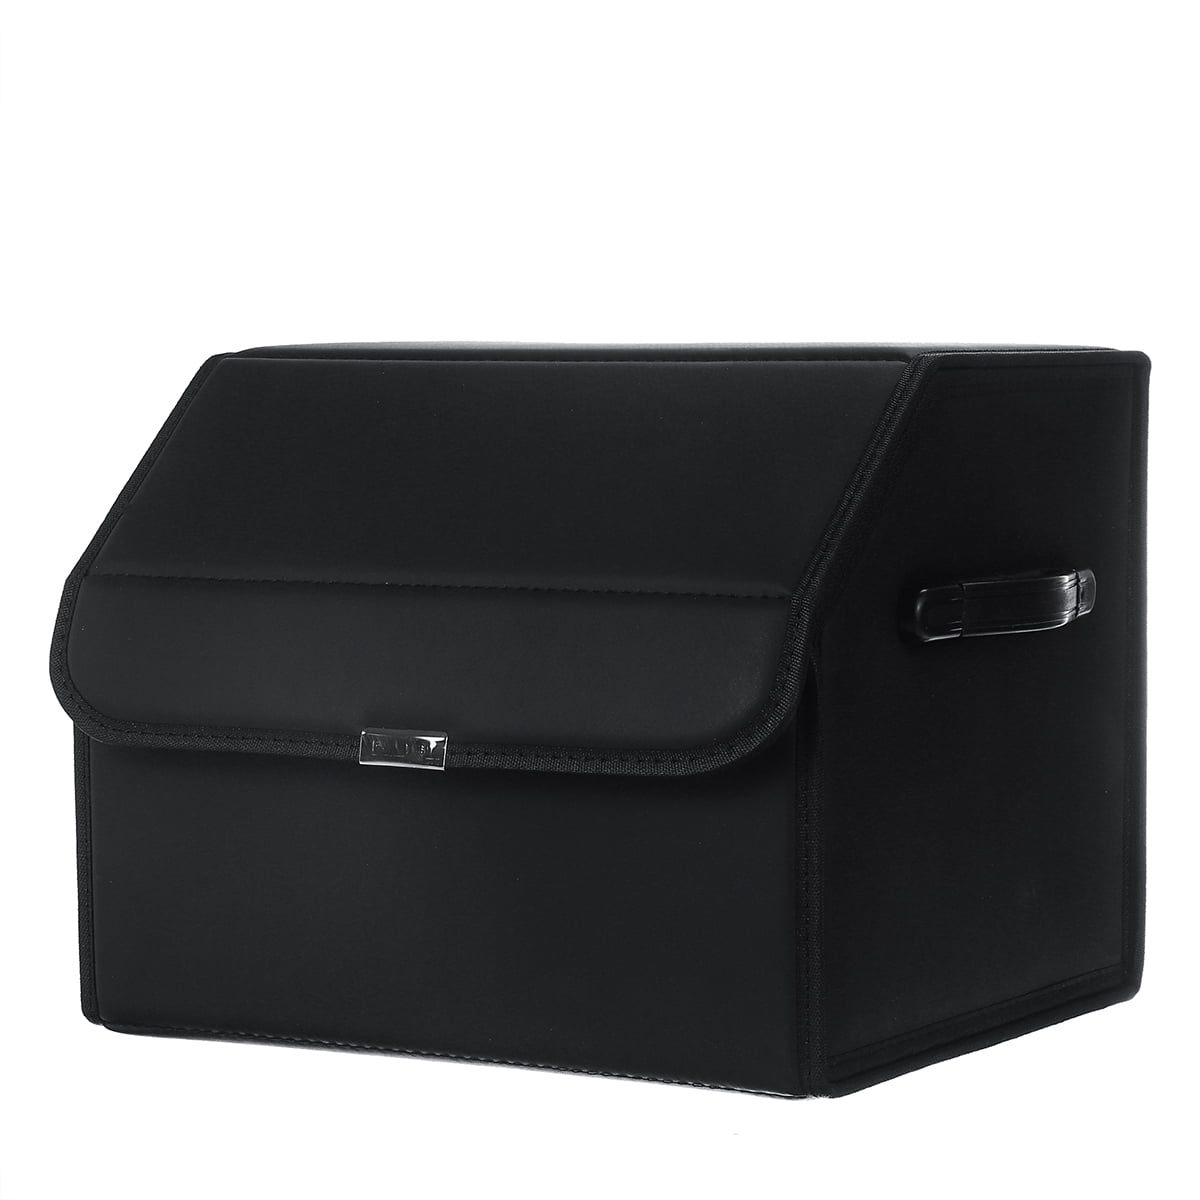 meori Black Foldable Boxes Medium Lava 2-Pack Organize Carry up to 65lbs Storage Basket Car Trunk 6.5 Gallon Shopper